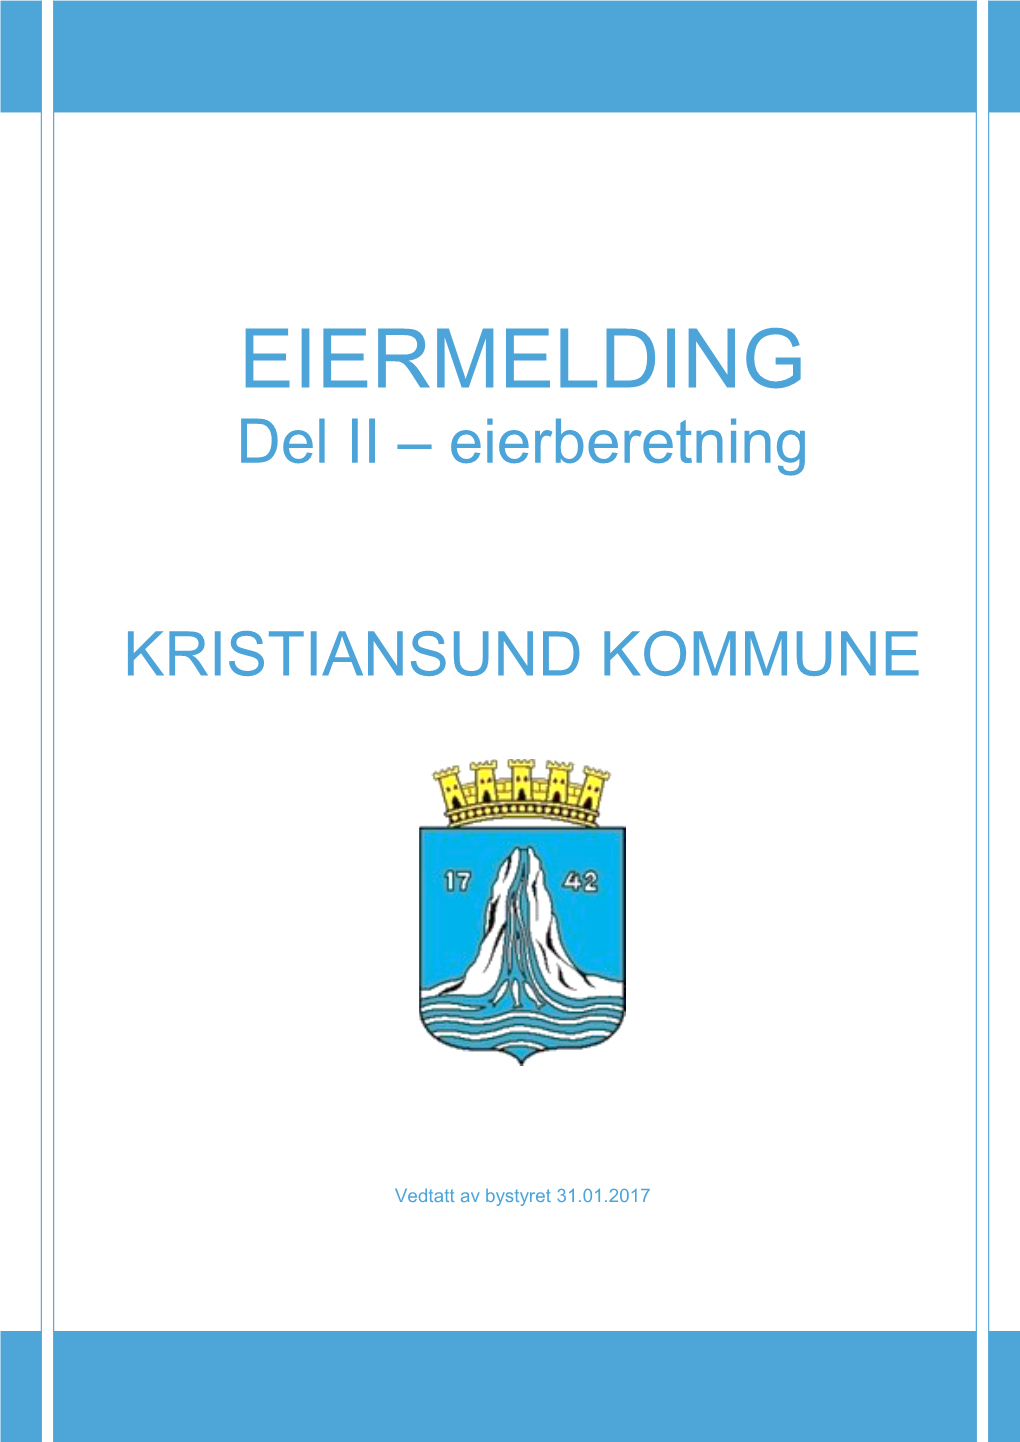 EIERMELDING Del II – Eierberetning